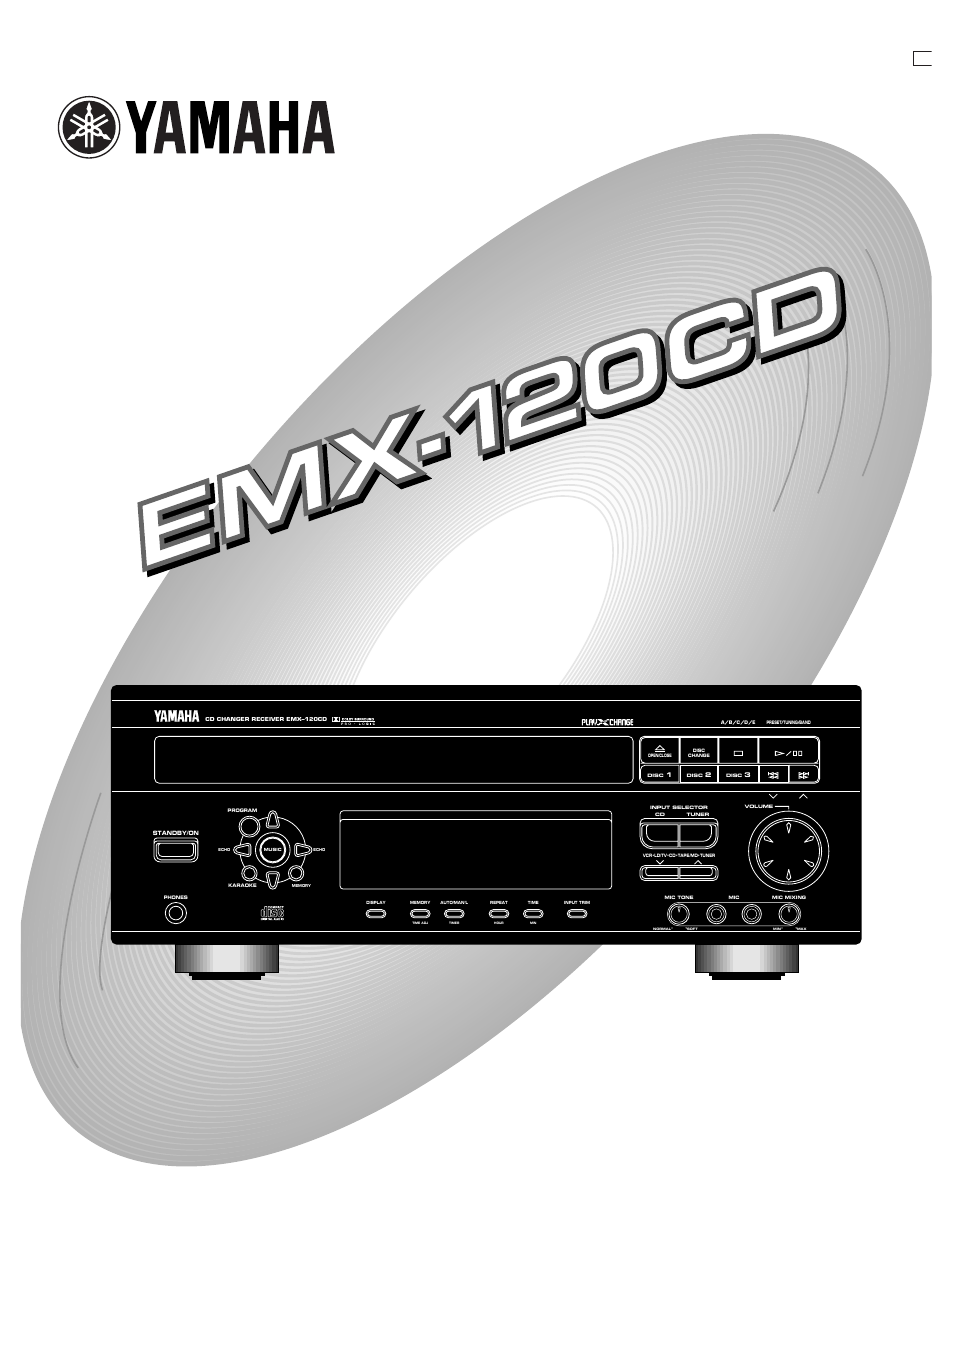 Yamaha EMX120CD User Manual | 53 pages